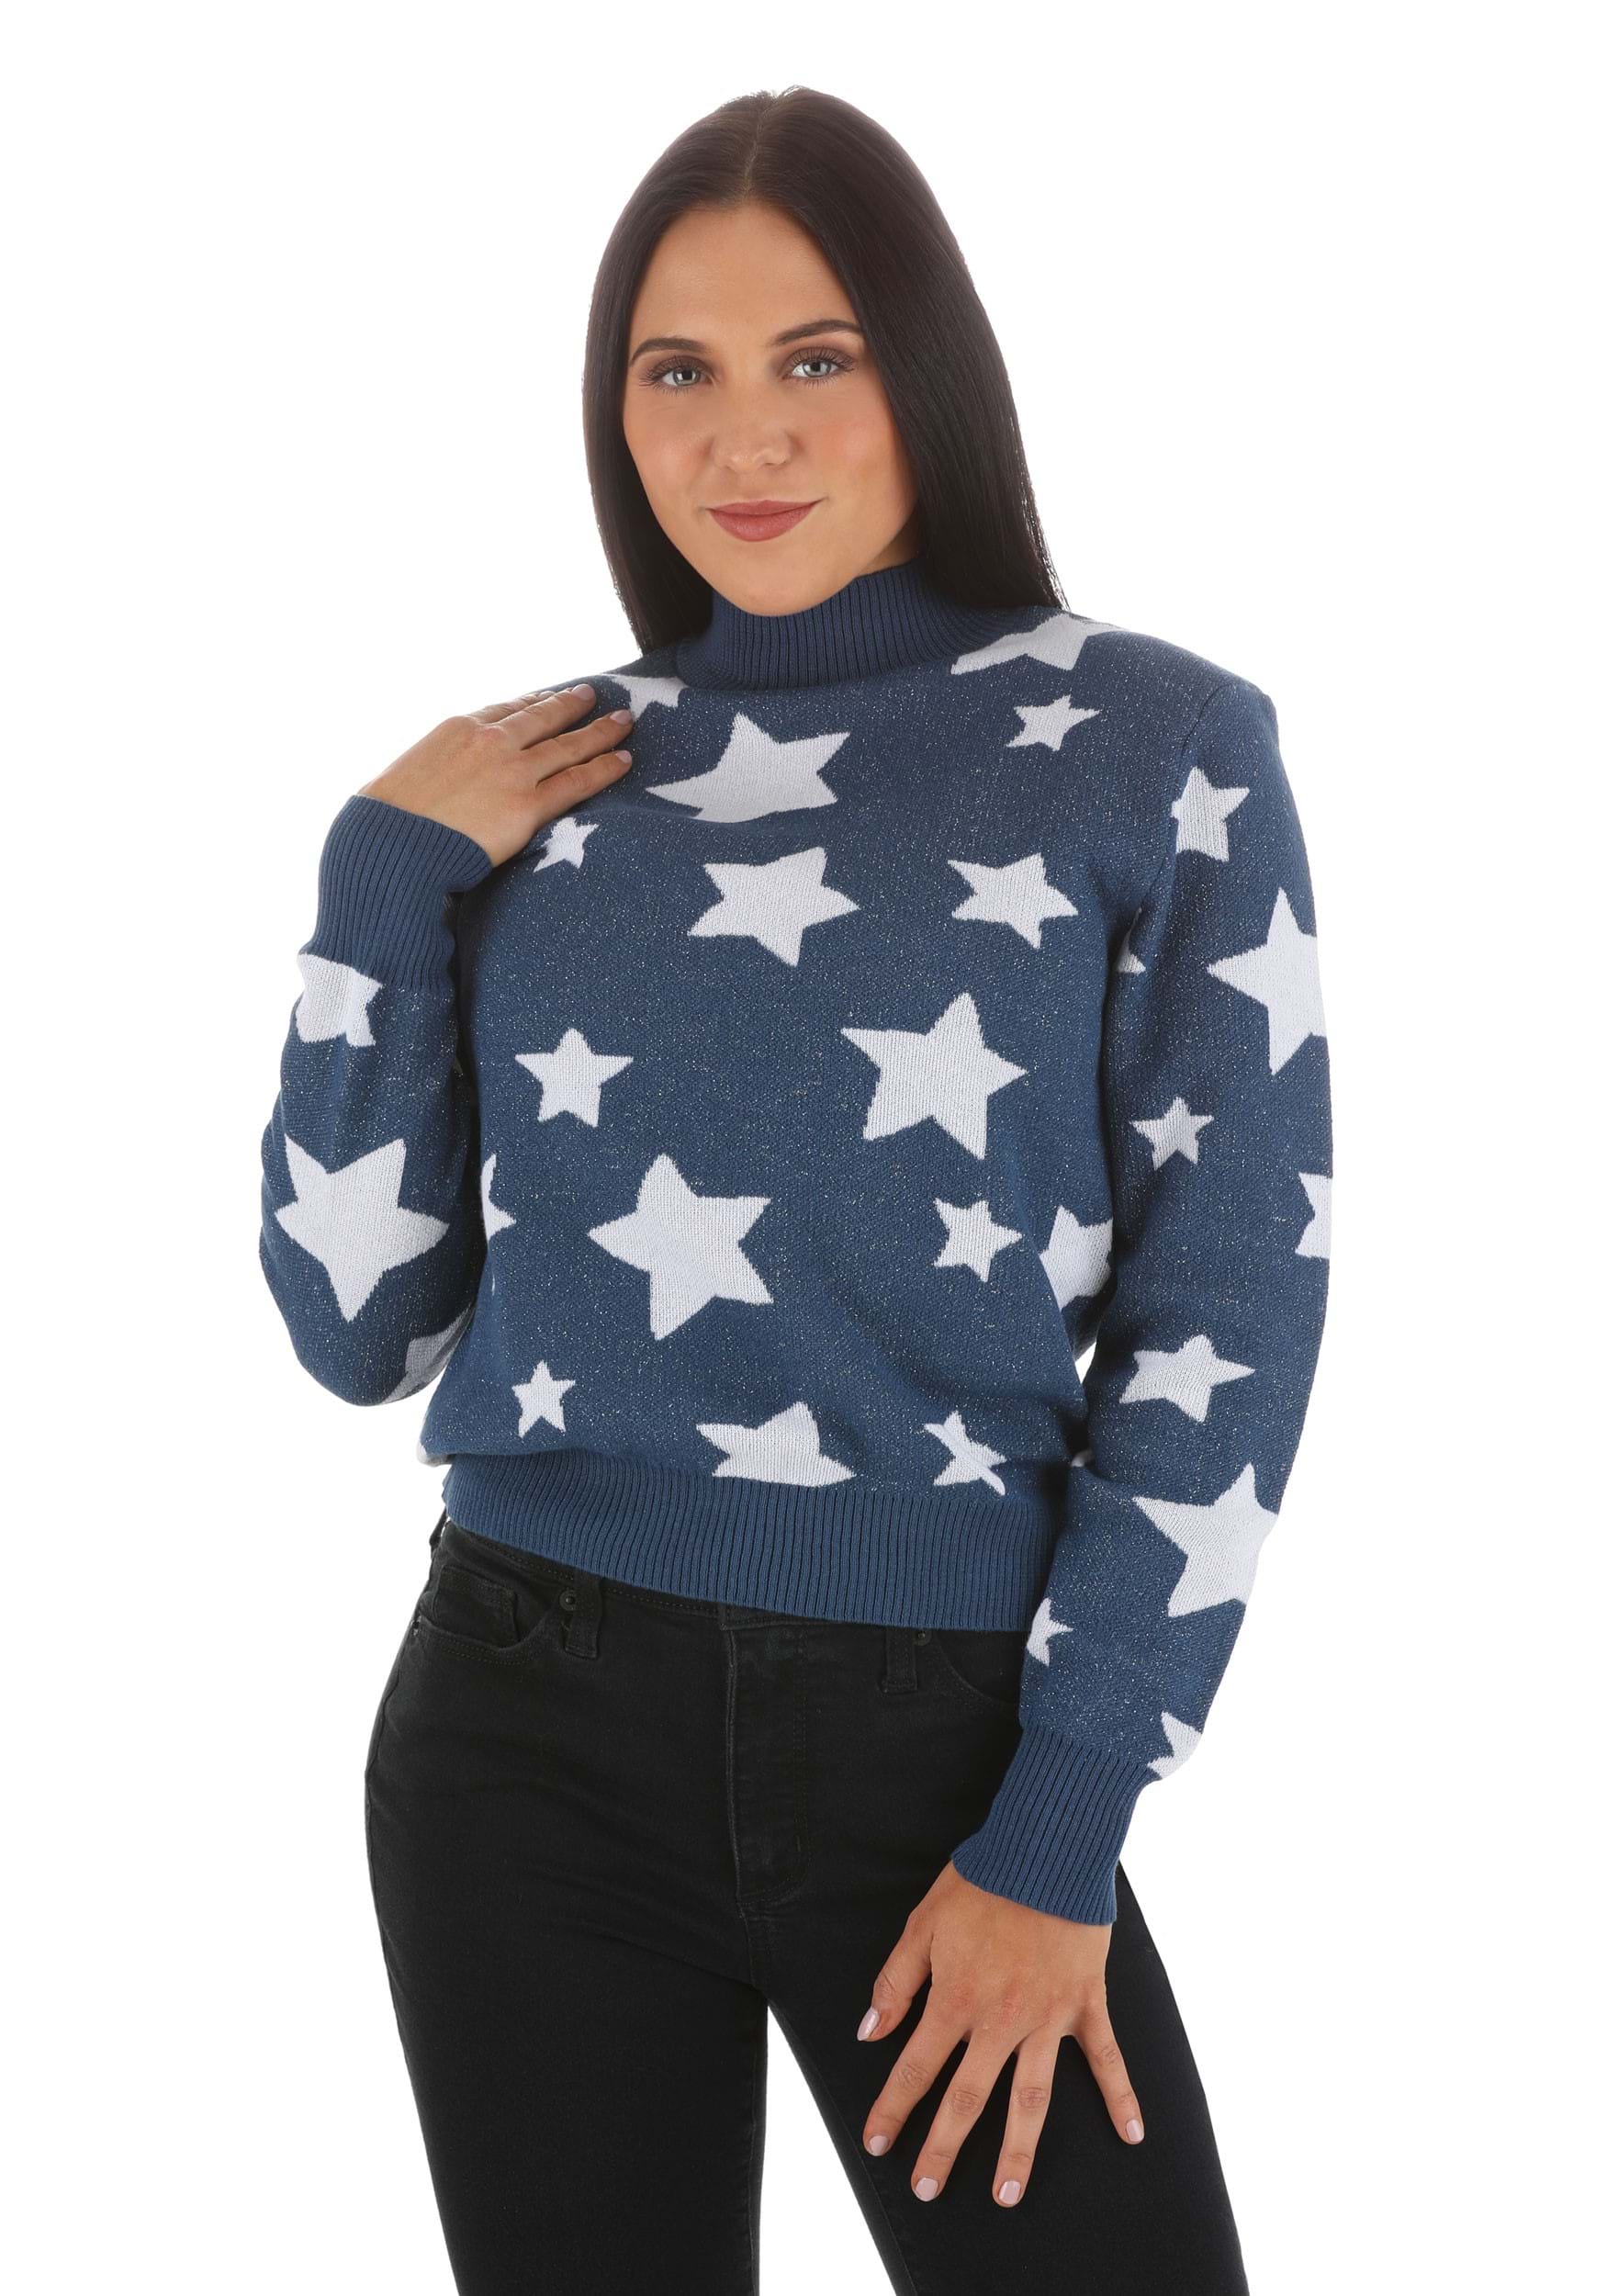 Coraline Blue Star Adult Sweater Costume